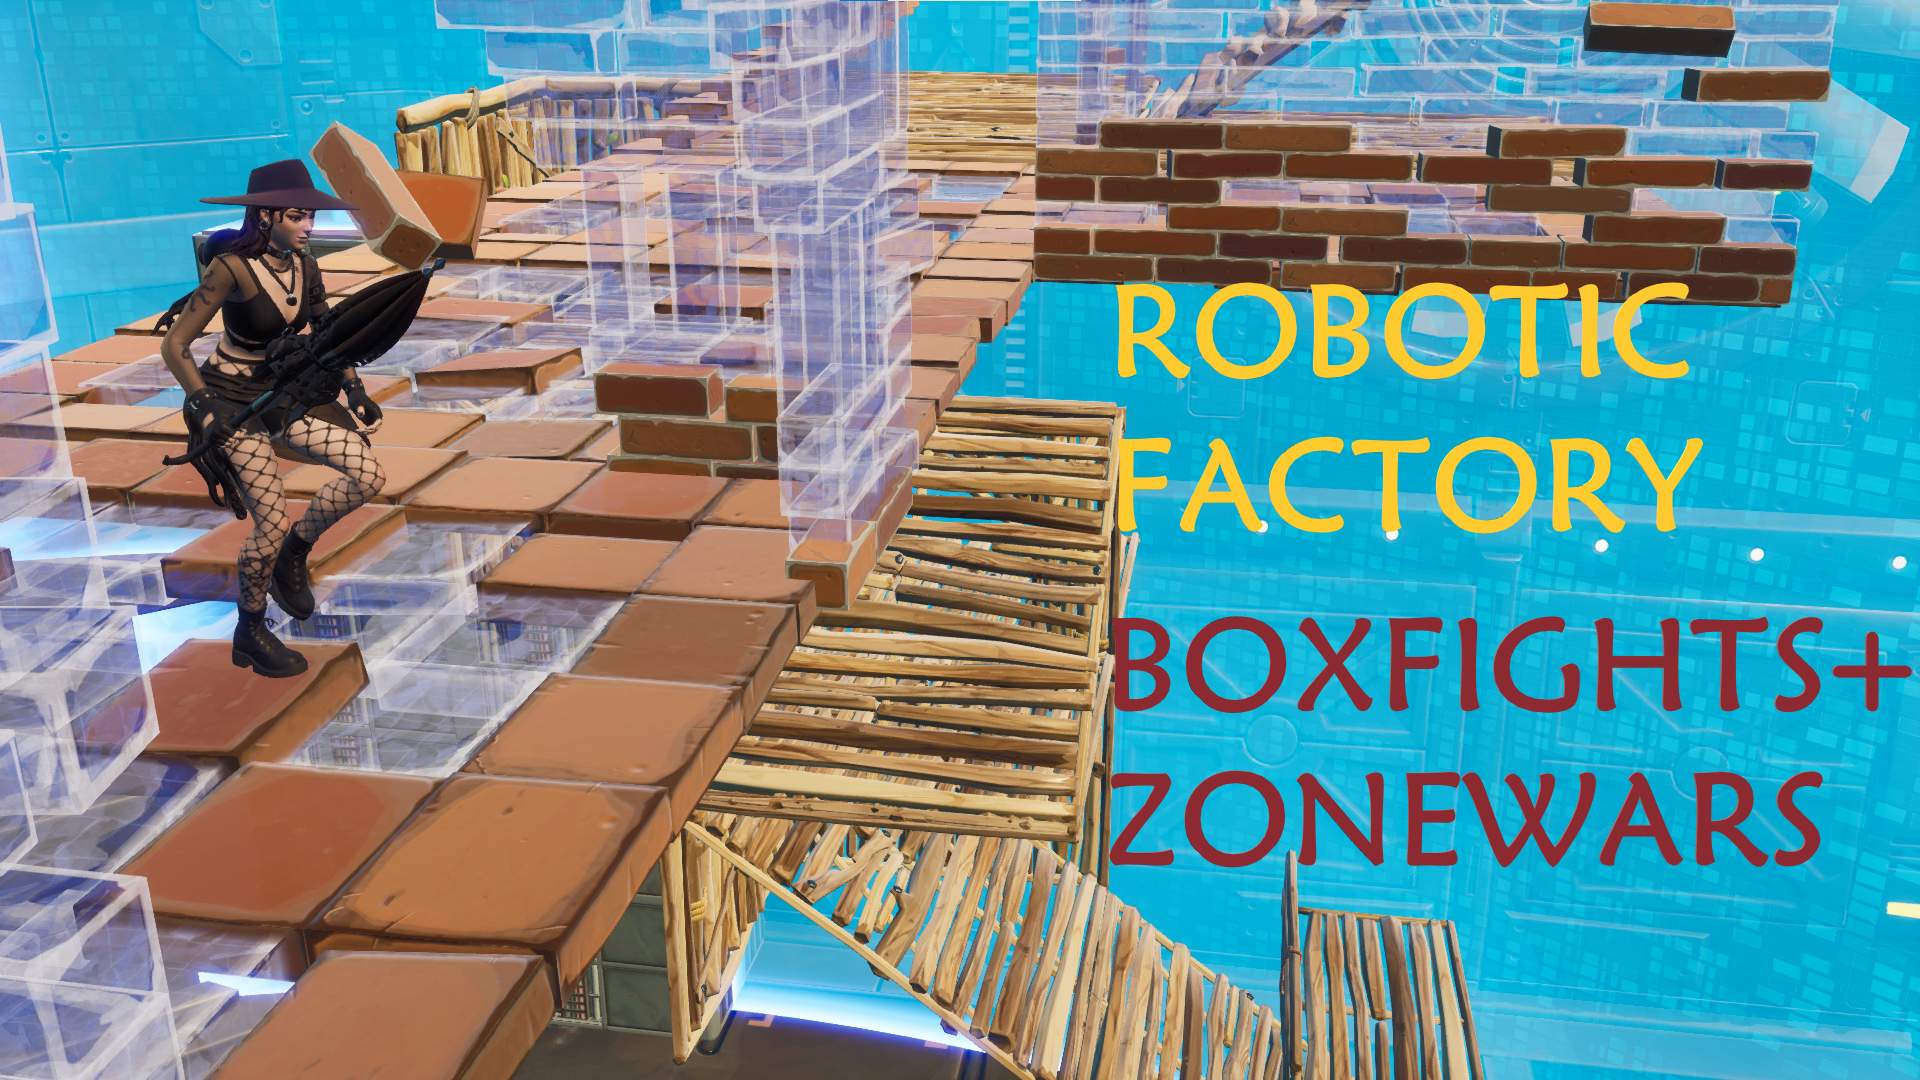 Robotic Factory BoxFights+ZoneWars